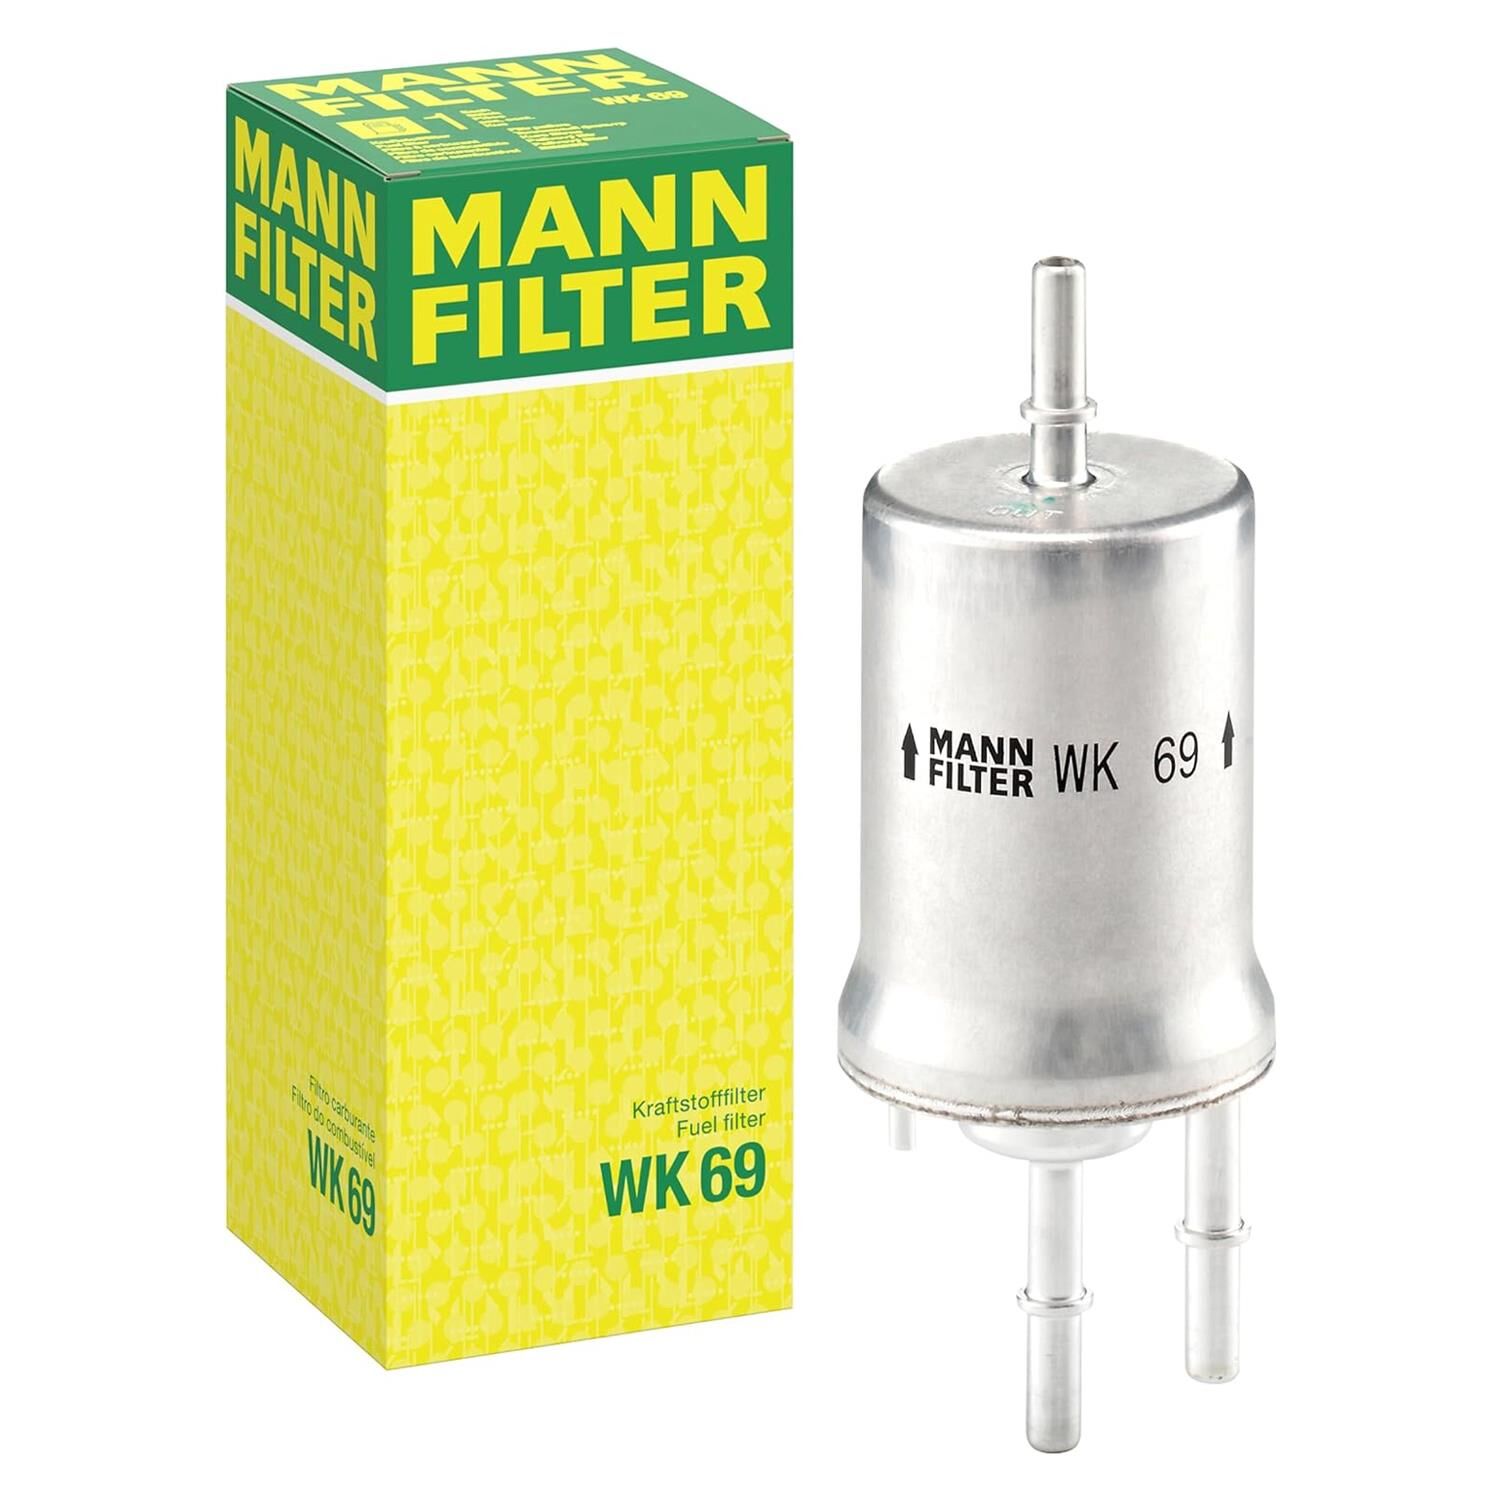 Mann Filter Skoda Superb 1.4 Tsi Benzin Yakıt Filtresi 2009-2014